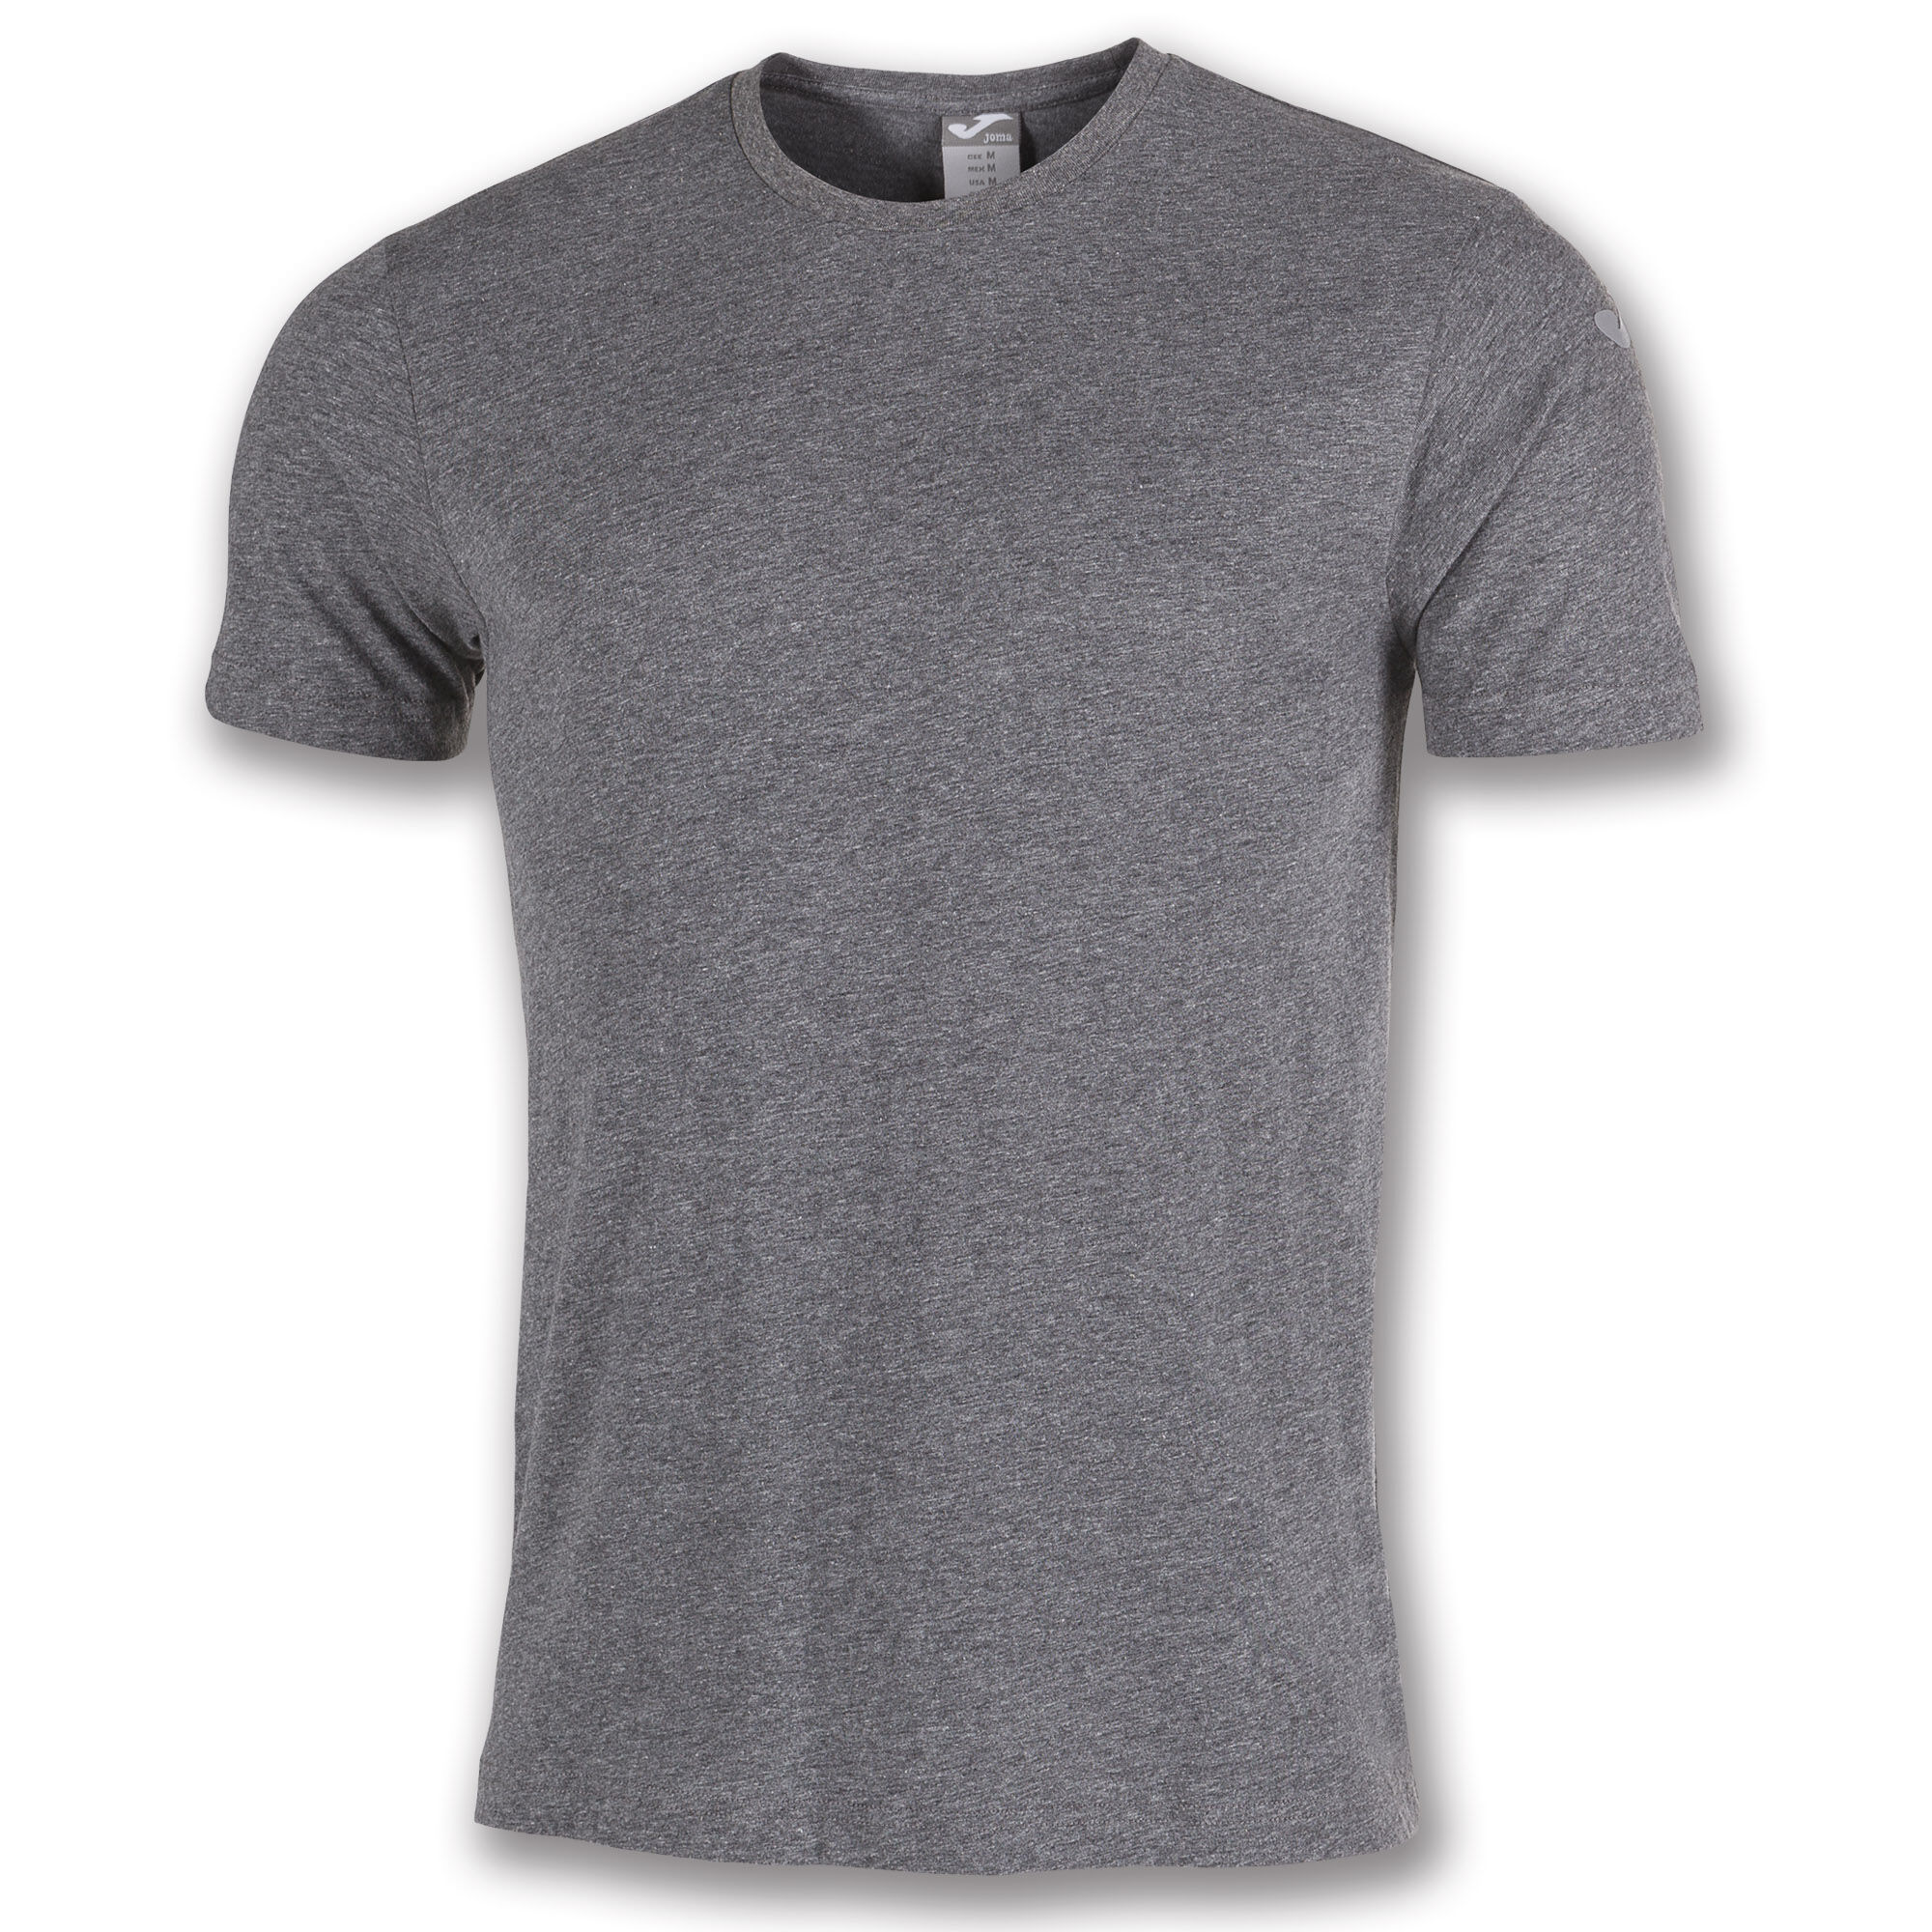 Camiseta manga corta hombre Nimes gris melange